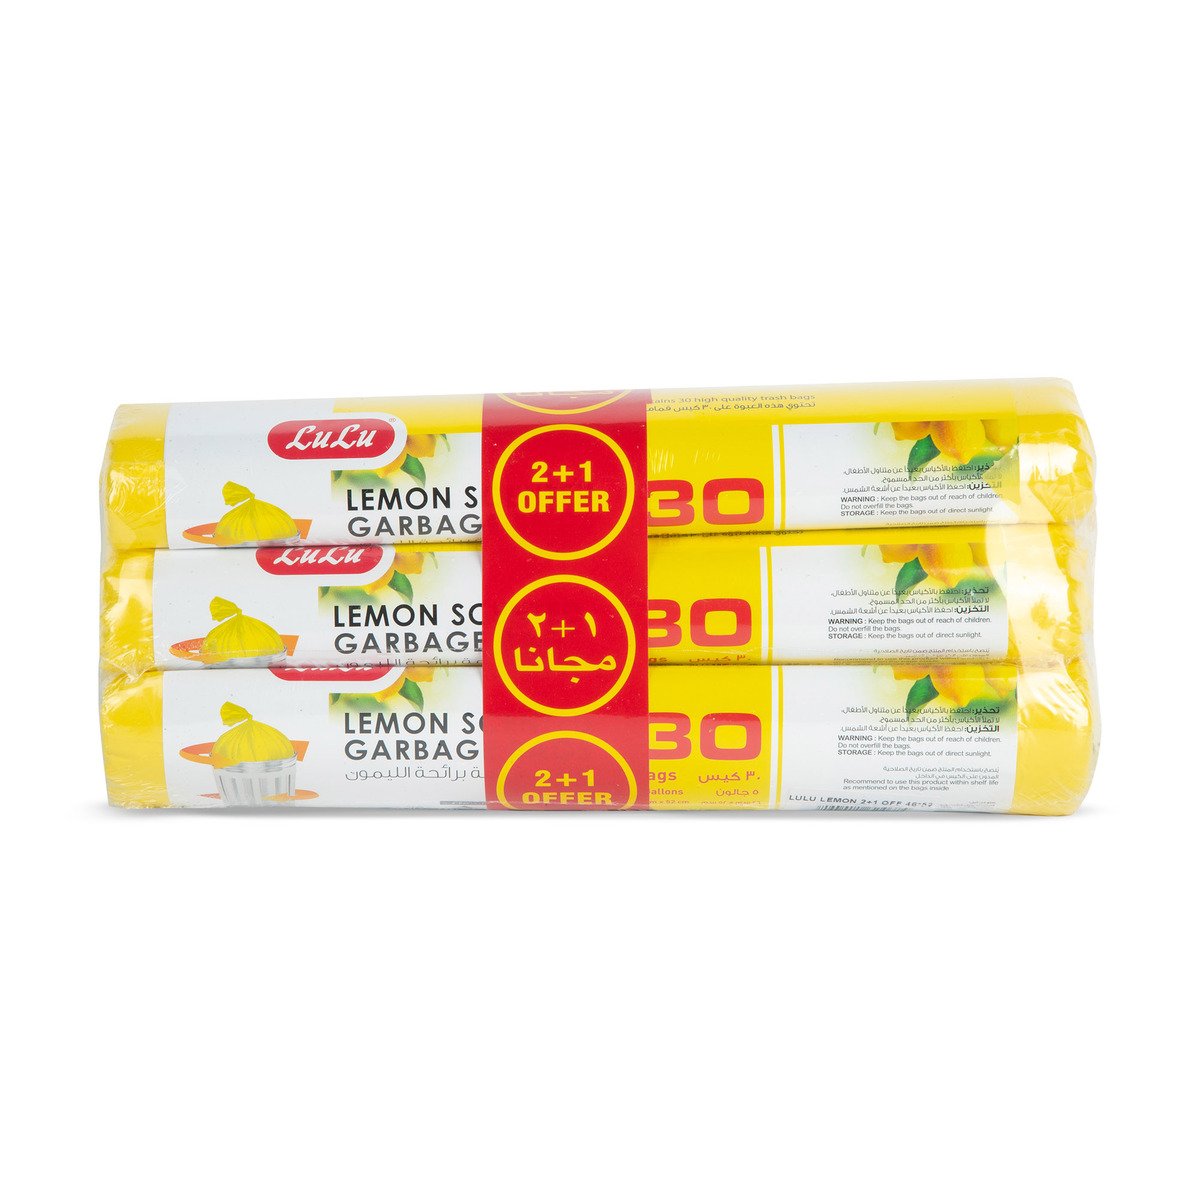 LuLu Garbage Bags Lemon 5 Gallons Size 46cm x 52cm 3pcs